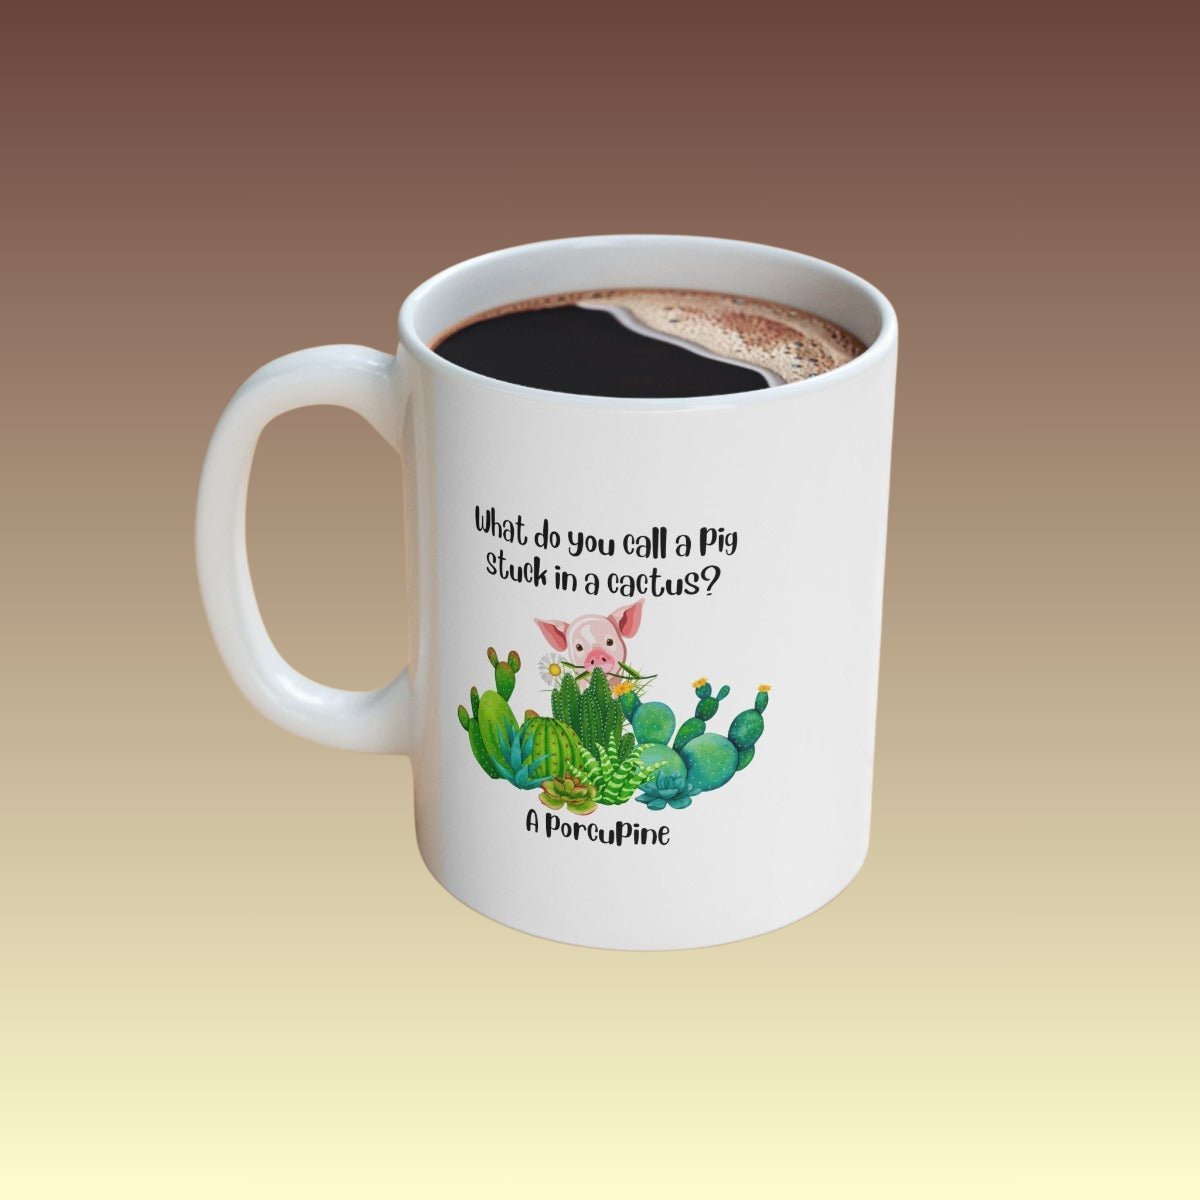 Pig Stuck In Cactus Coffee Mug - Coffee Purrfection